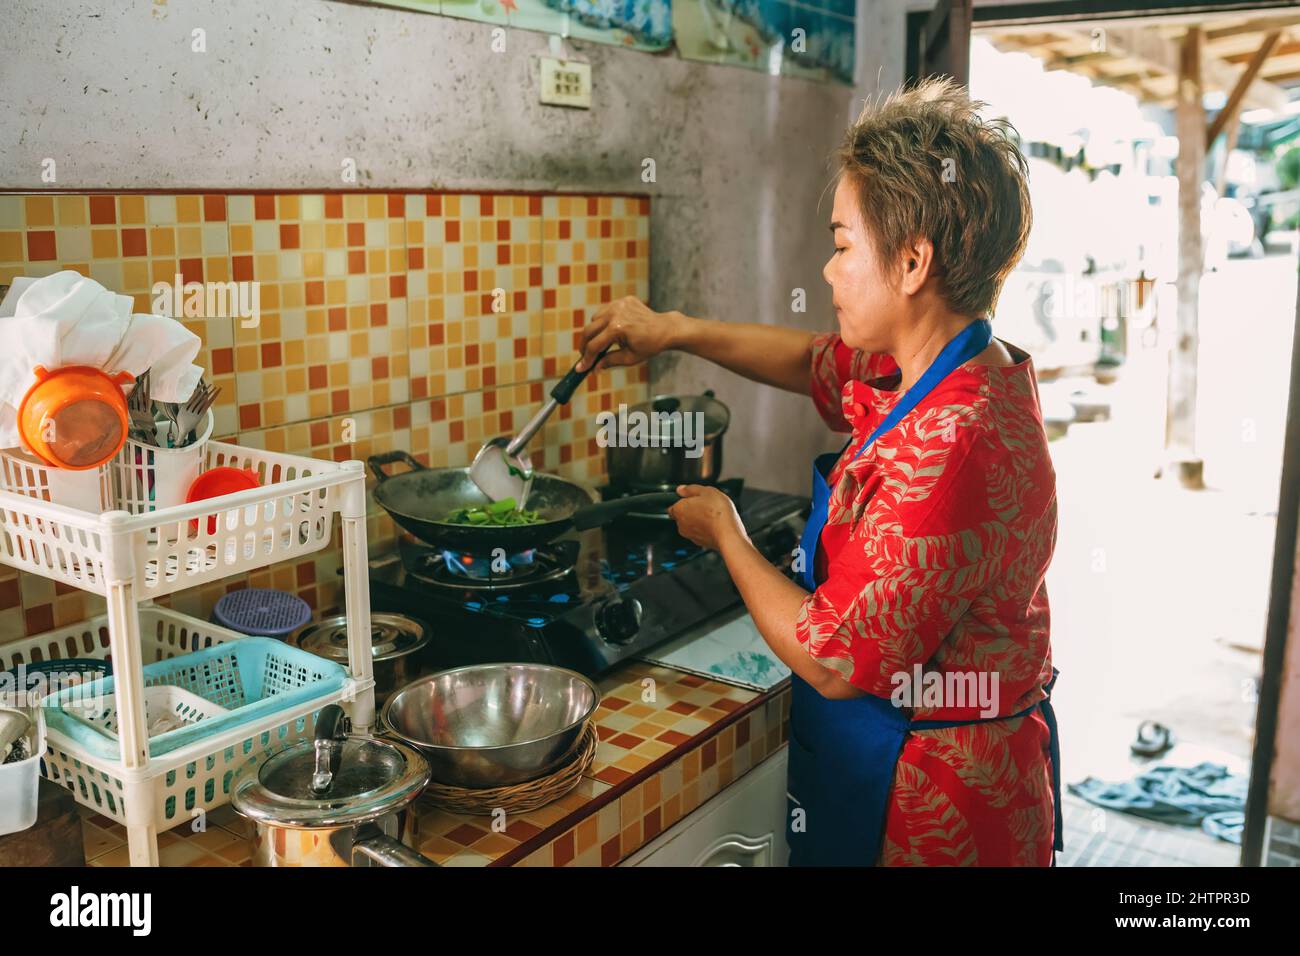 Asiatische Frau kurze Haare in roten Kleid Kochen rühren gebratenes Gemüse in der Küche Stockfoto